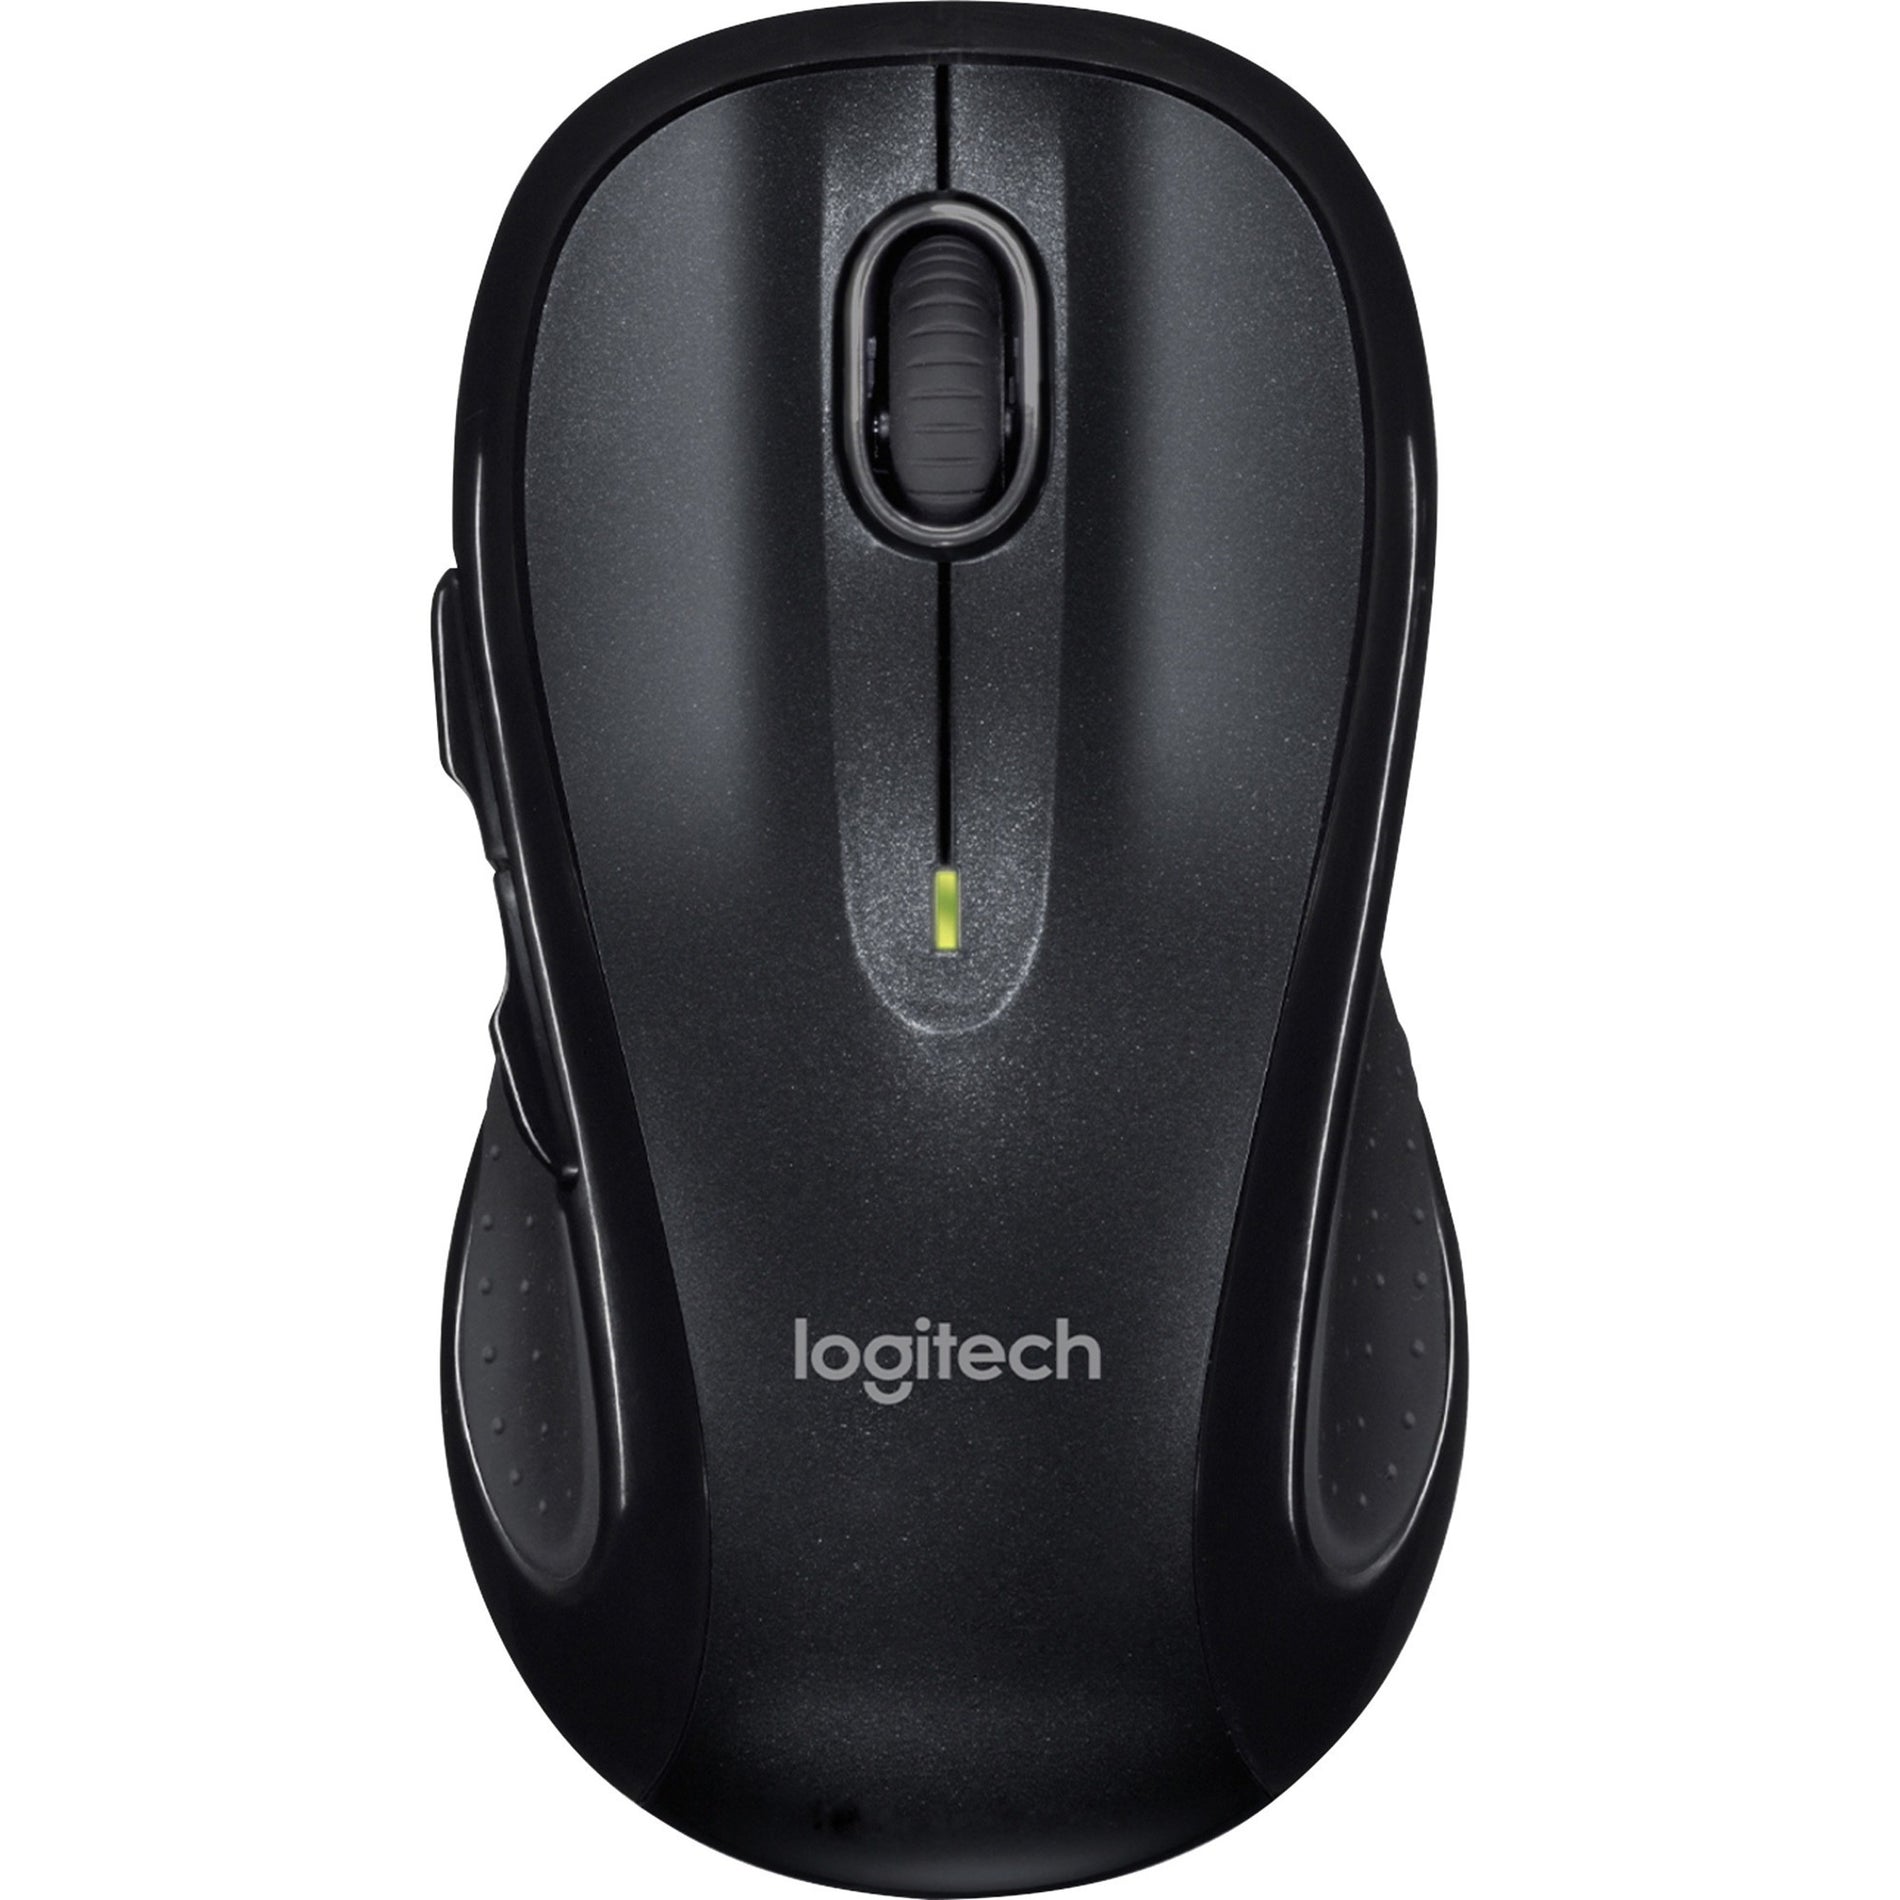 Logitech 910-001822 M510 Wireless Optical Mouse, Ergonomic Fit, Tilt Wheel, 7 Buttons, 1000 dpi, Gray/Black [Discontinued]